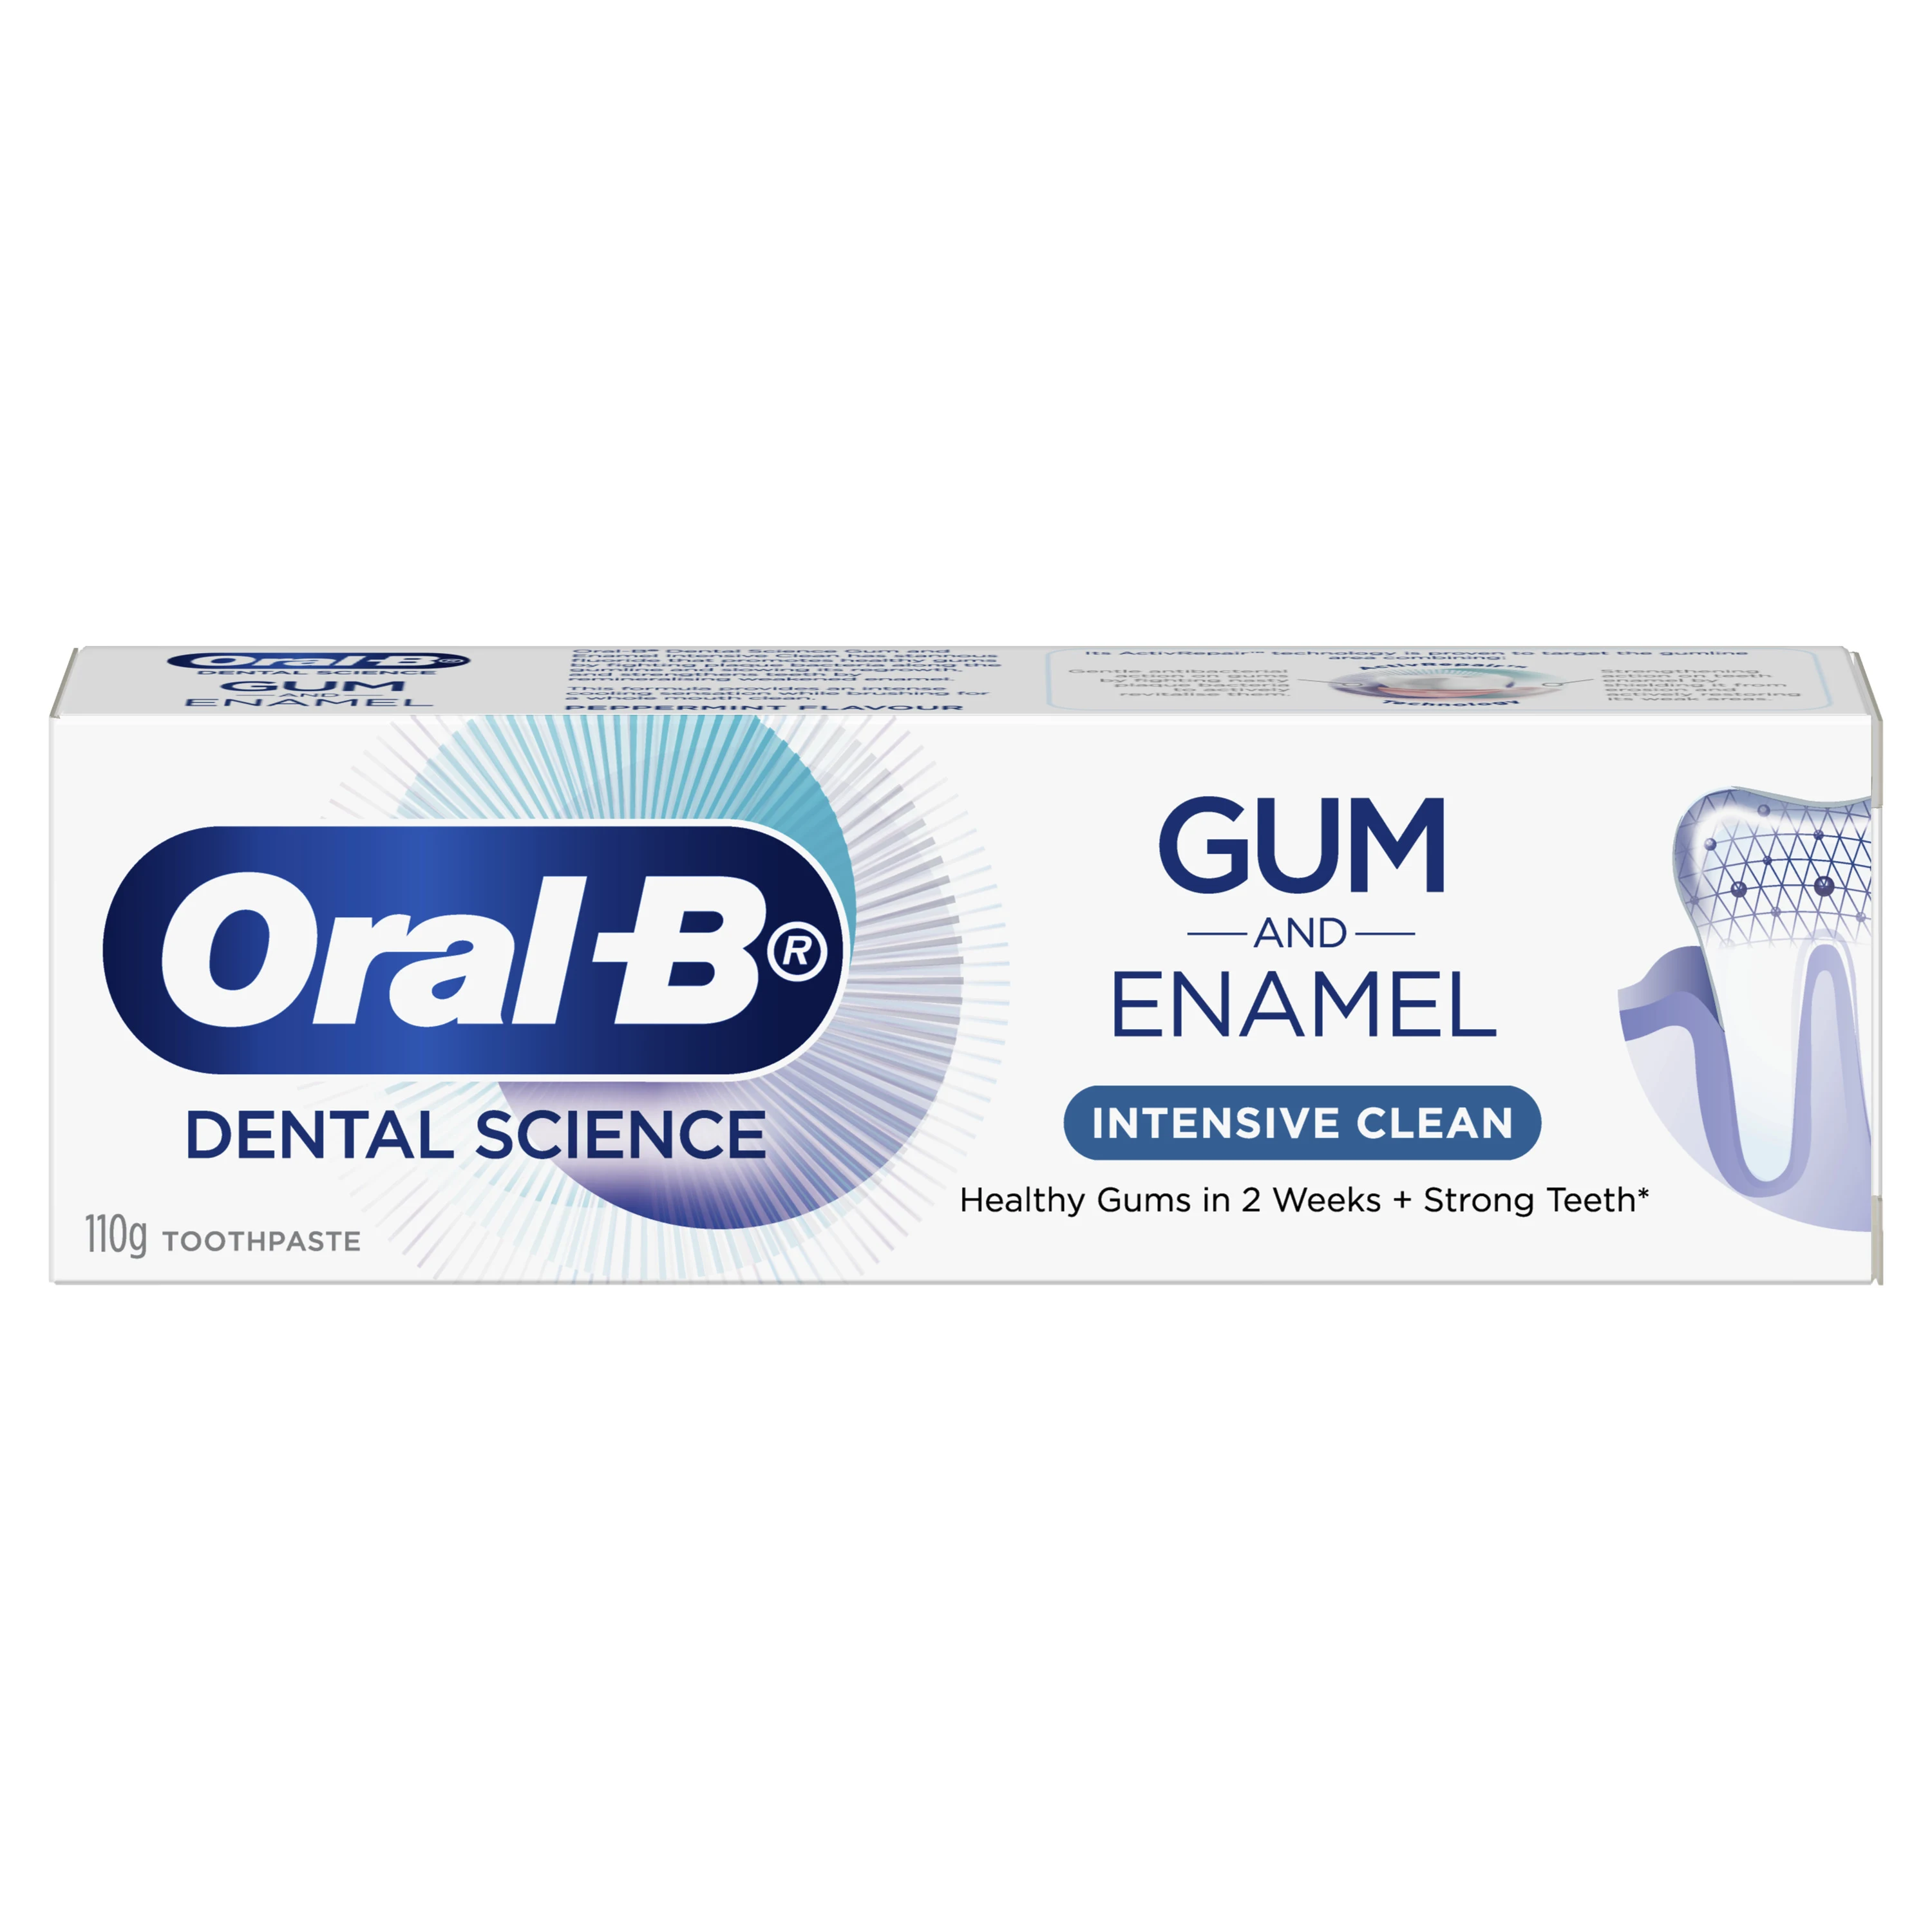 Oral-BGum & Enamel Intensive Clean Toothpaste 